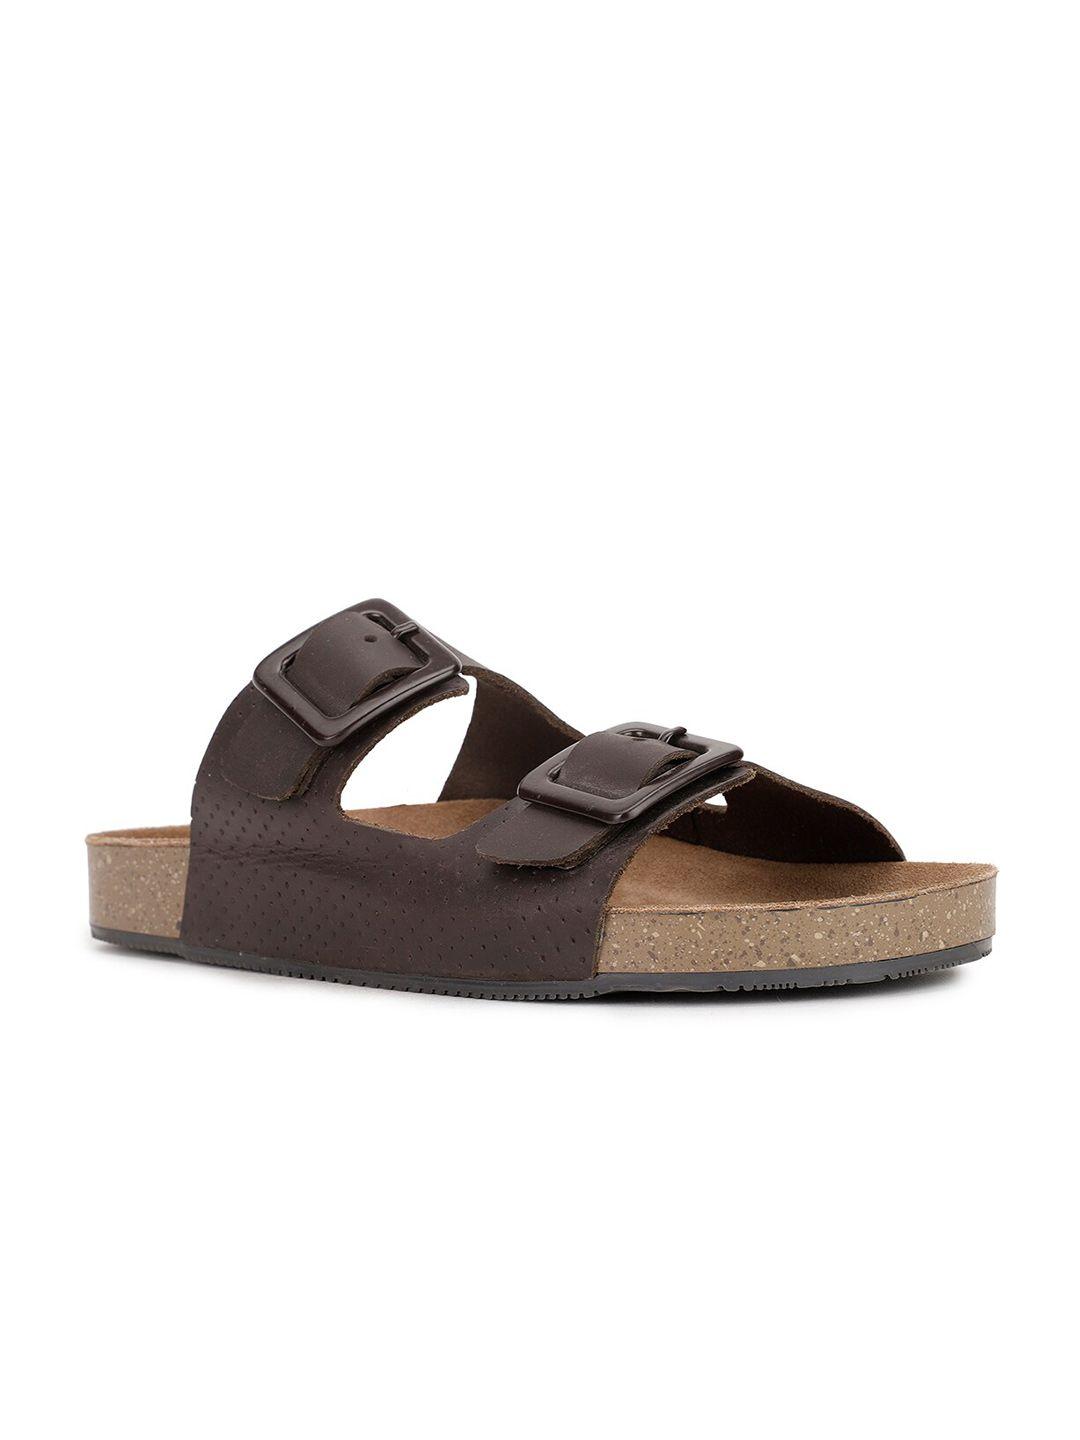 bata-men-brown-leather-comfort-sandals